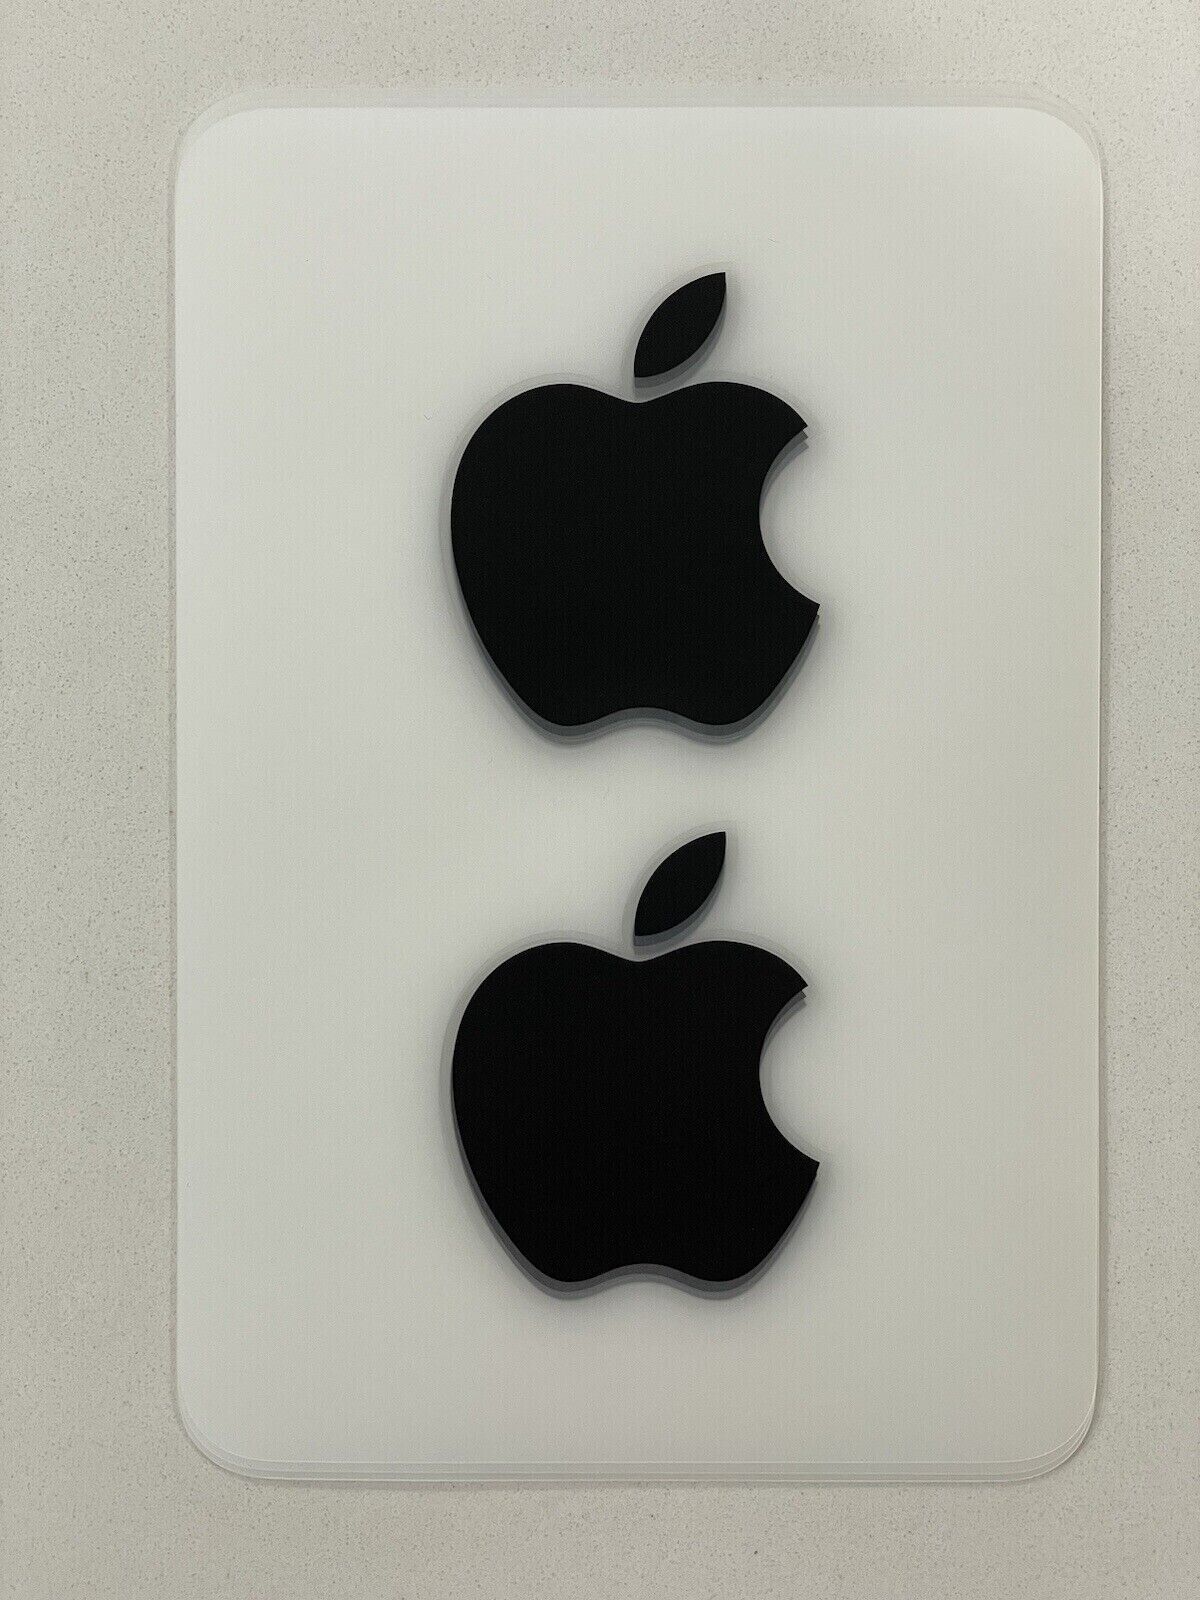 3x Set Black Apple Logo Sticker Decal - Genuine OEM - Includes 6 Large Stickers